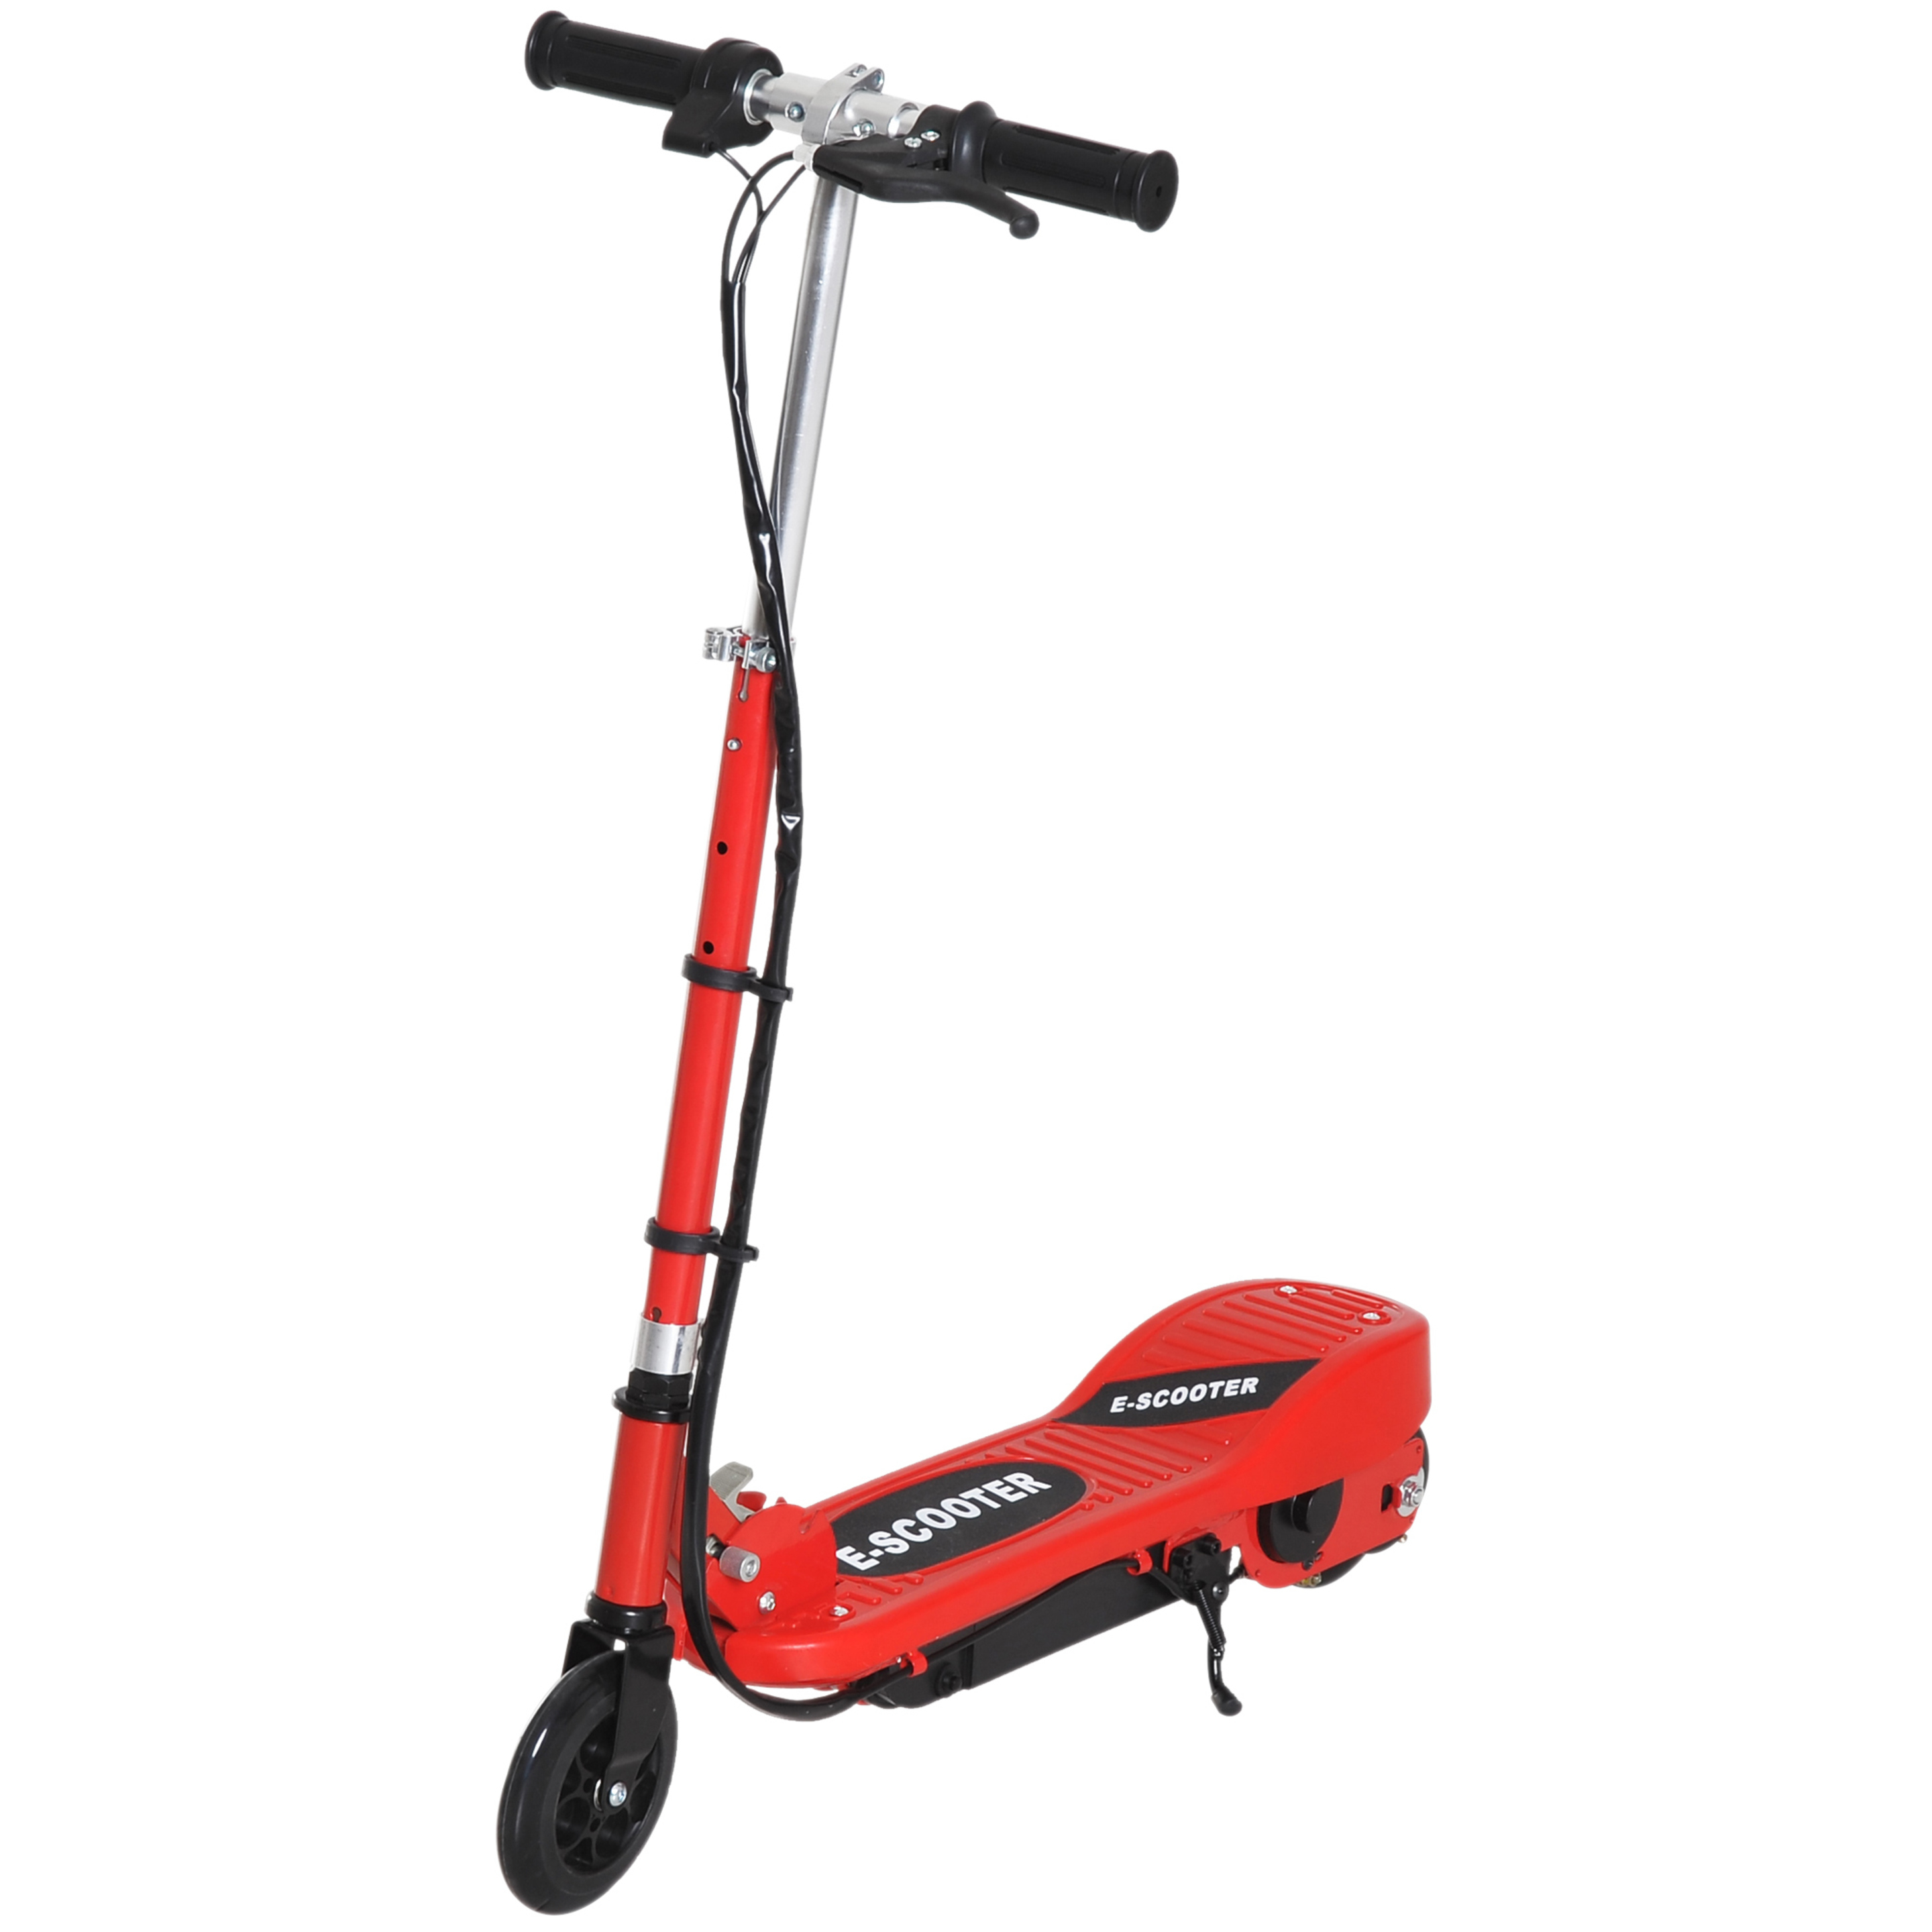 Homcom® Patinete Eléctrico Niño 7-14 Años E-scooter Plegable Manillar Ajustable Carga 50kg Rojo